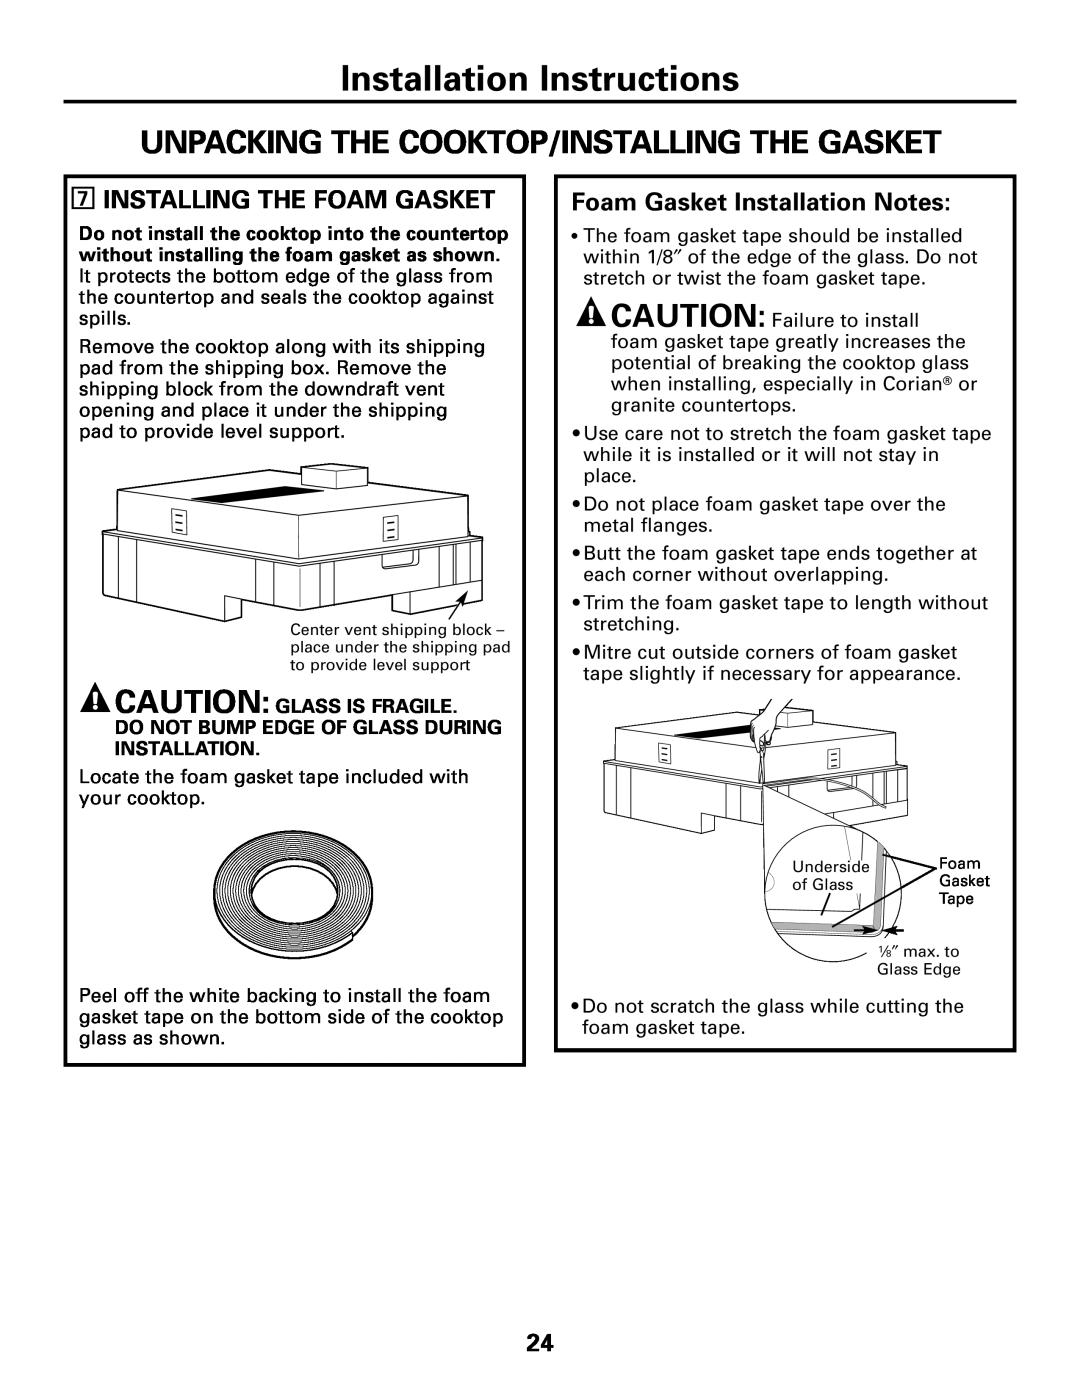 GE JGP989 manual Unpacking The Cooktop/Installing The Gasket, Installation Instructions, 7INSTALLING THE FOAM GASKET 